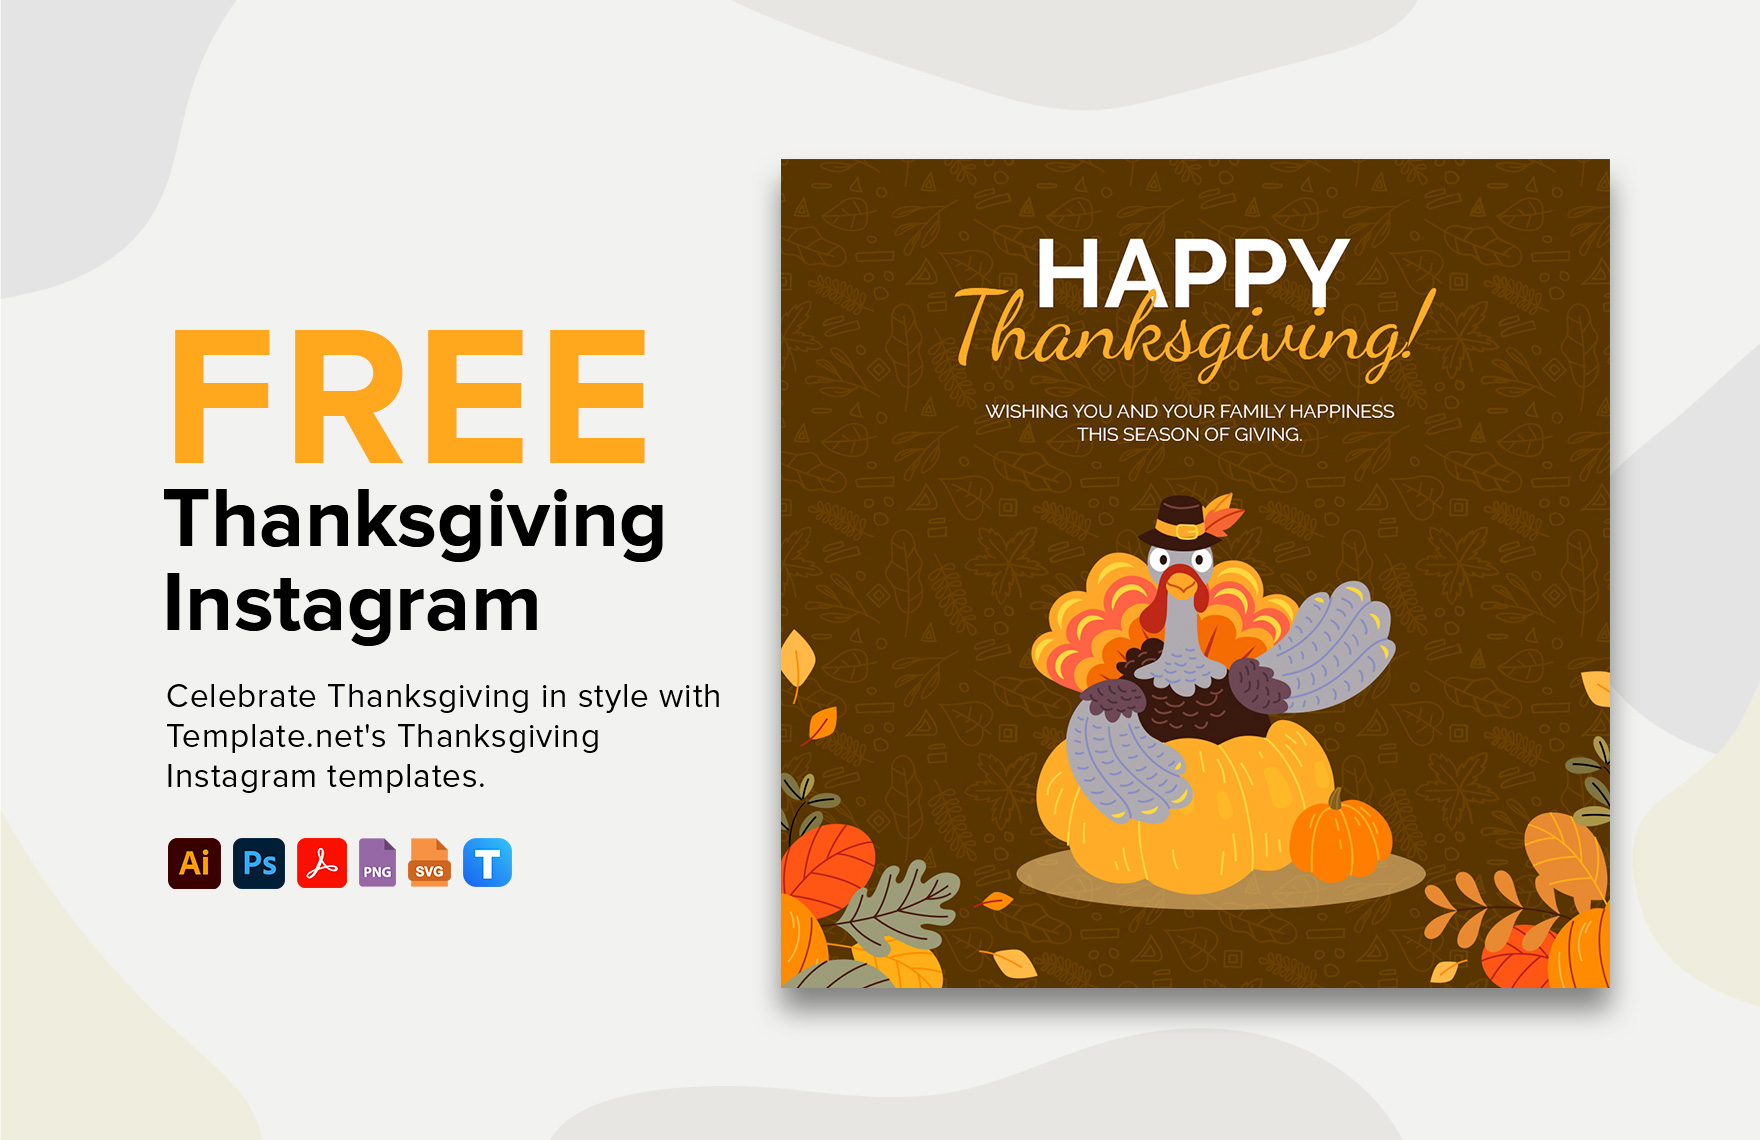 Free Thanksgiving Instagram in PDF, Illustrator, PSD, SVG, PNG